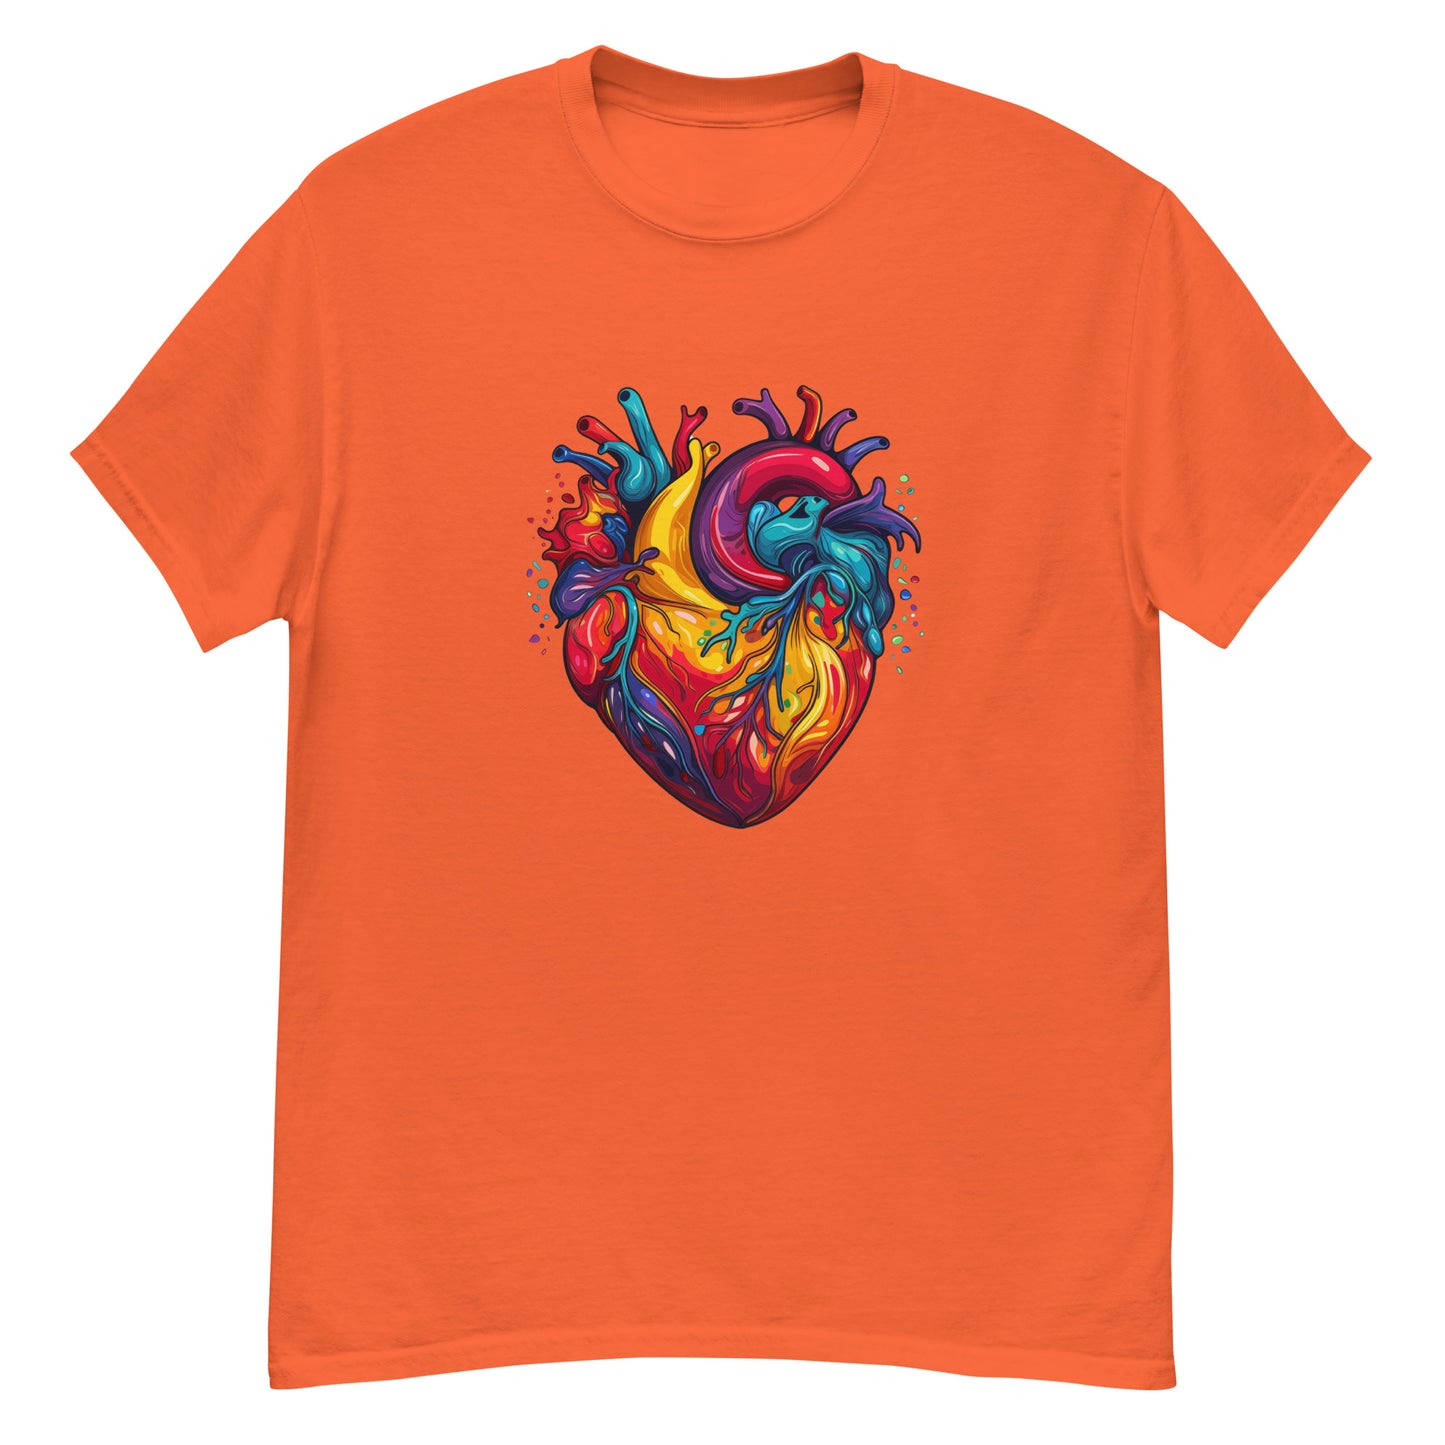 Groovy Anatomical Heart Tee | Retro Colors Heart T-shirt | Unique Design